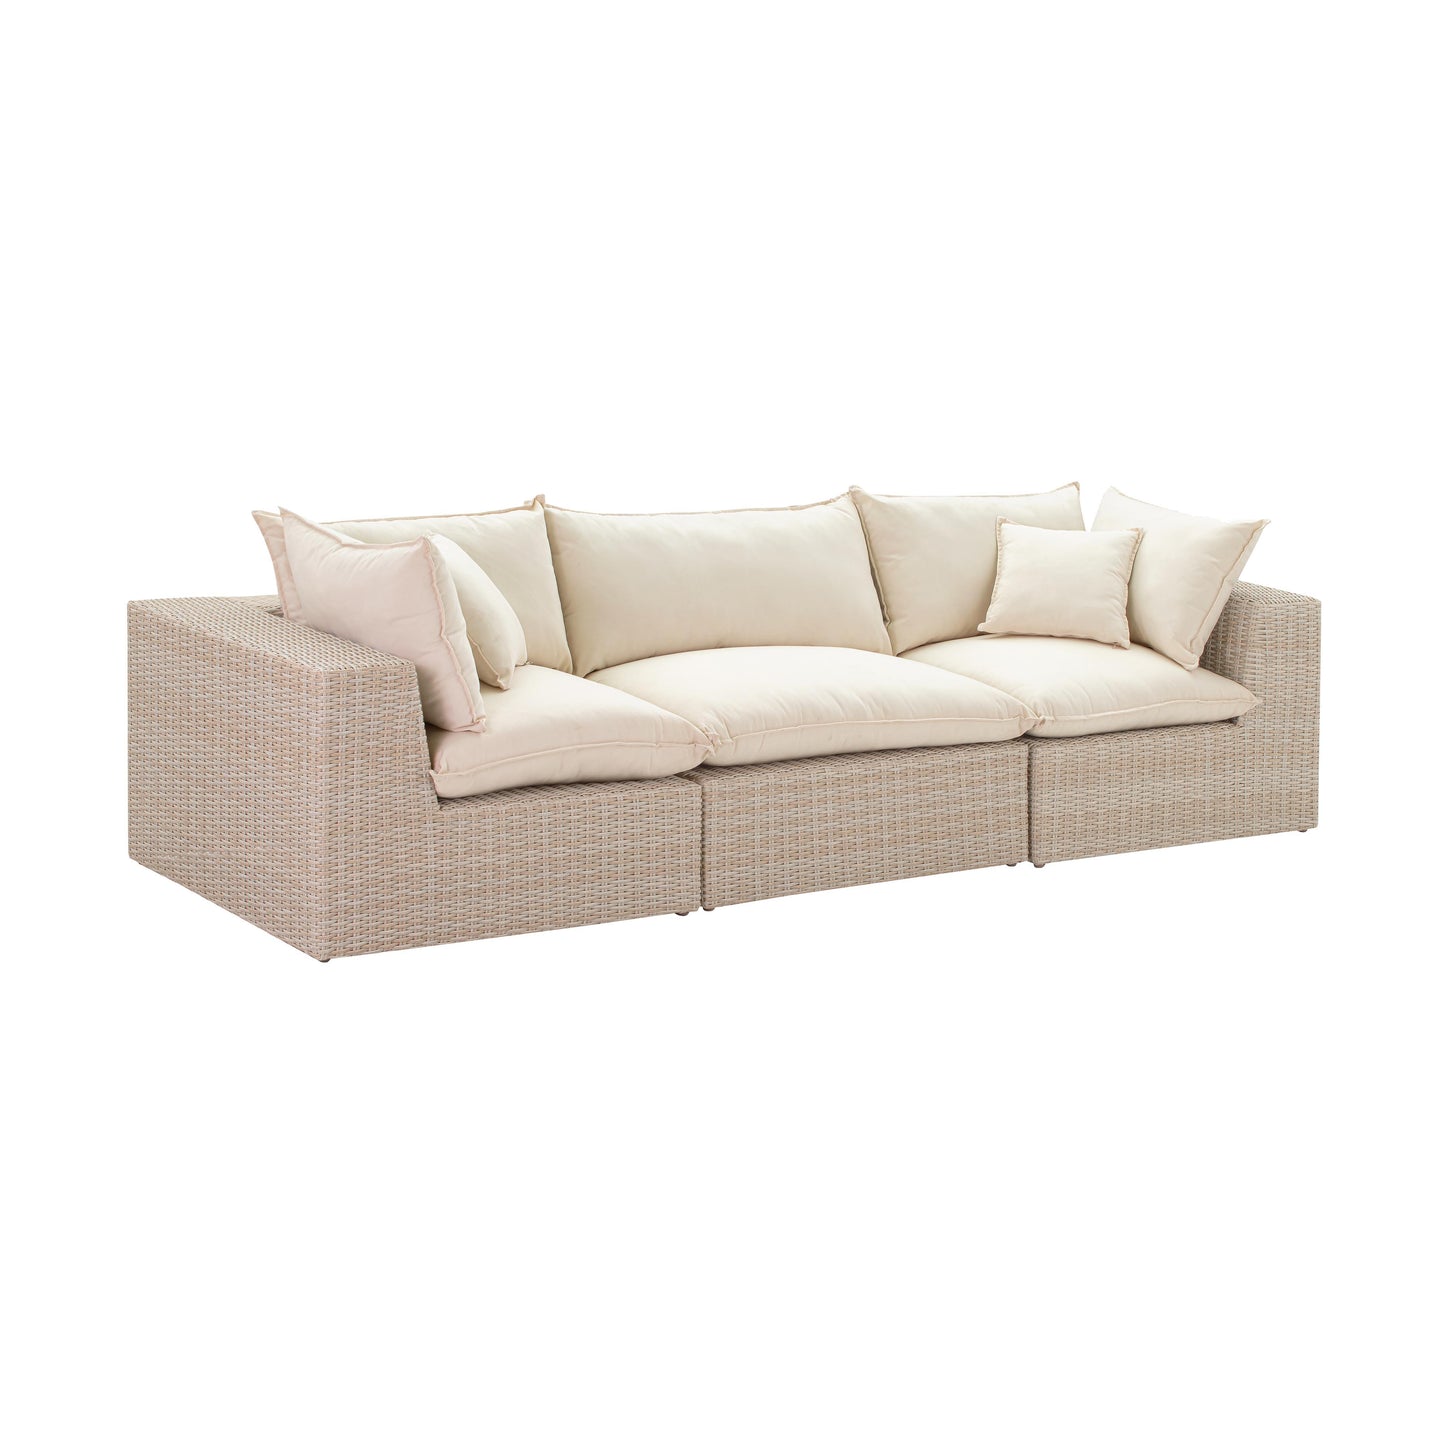 Tov Furniture Cali Natural Wicker Outdoor Modular Sofa